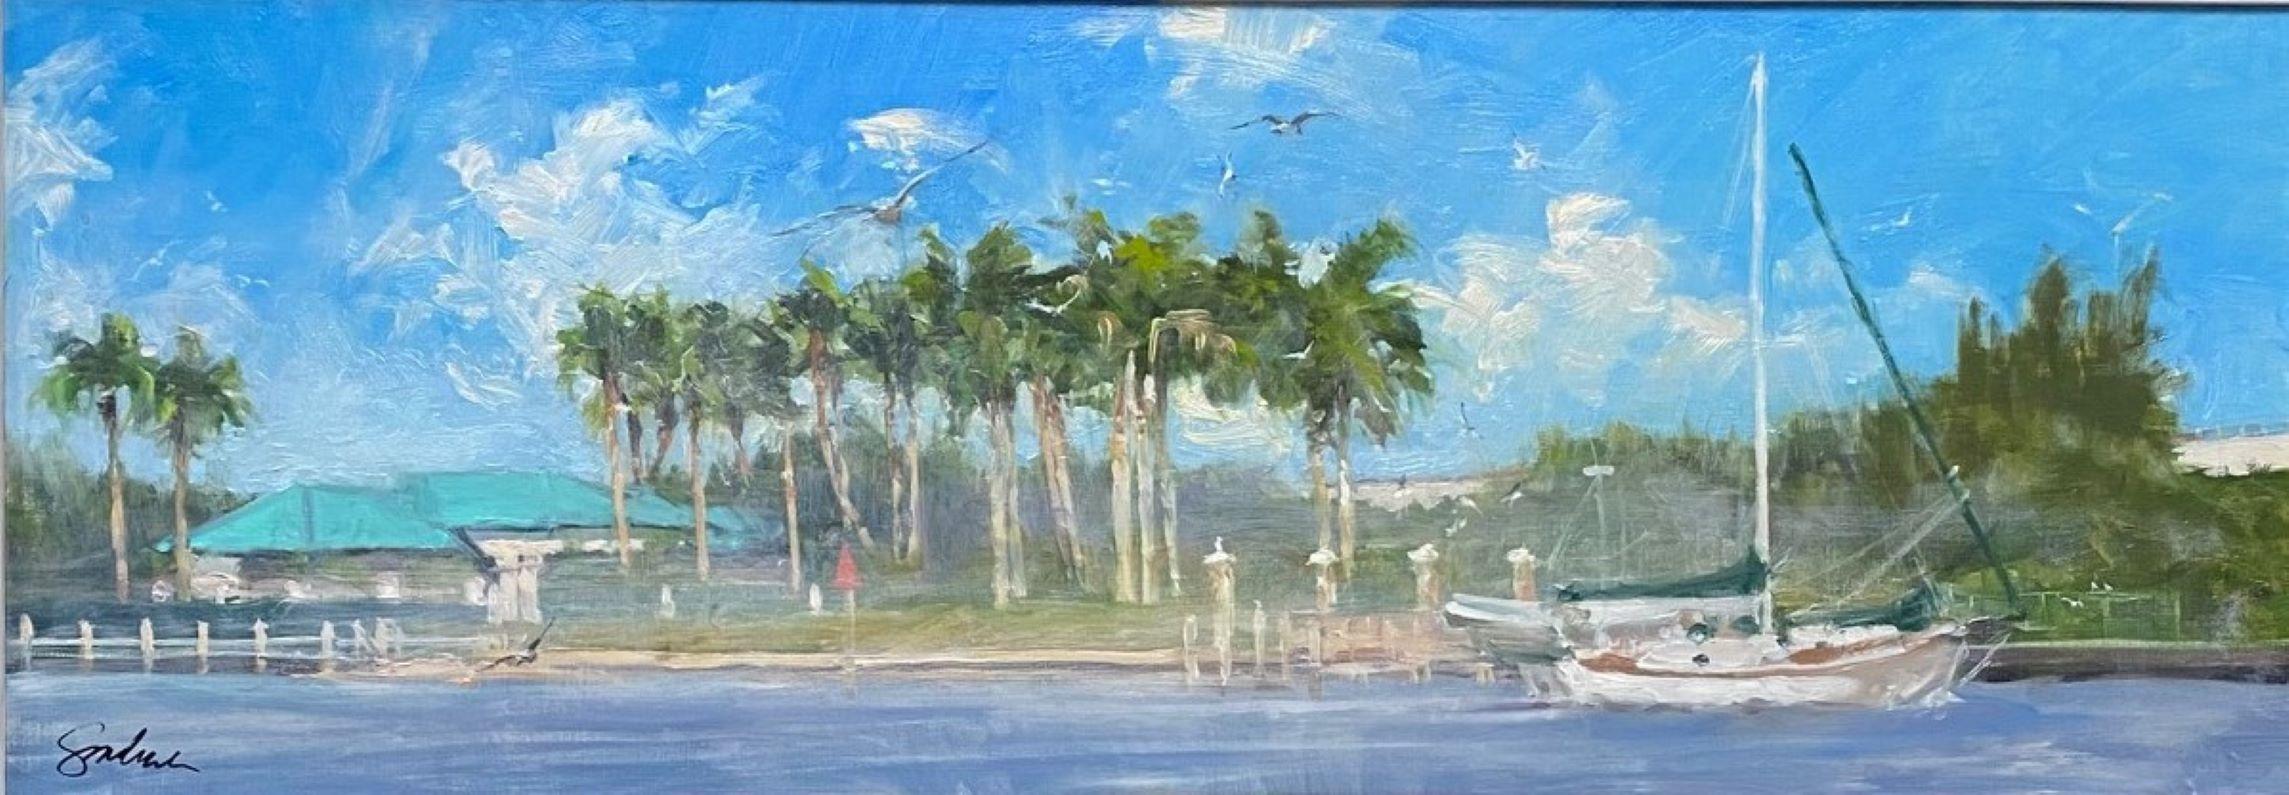 Foggy Morn, original impressionist coastal landscape - Painting by Joseph Sundwall